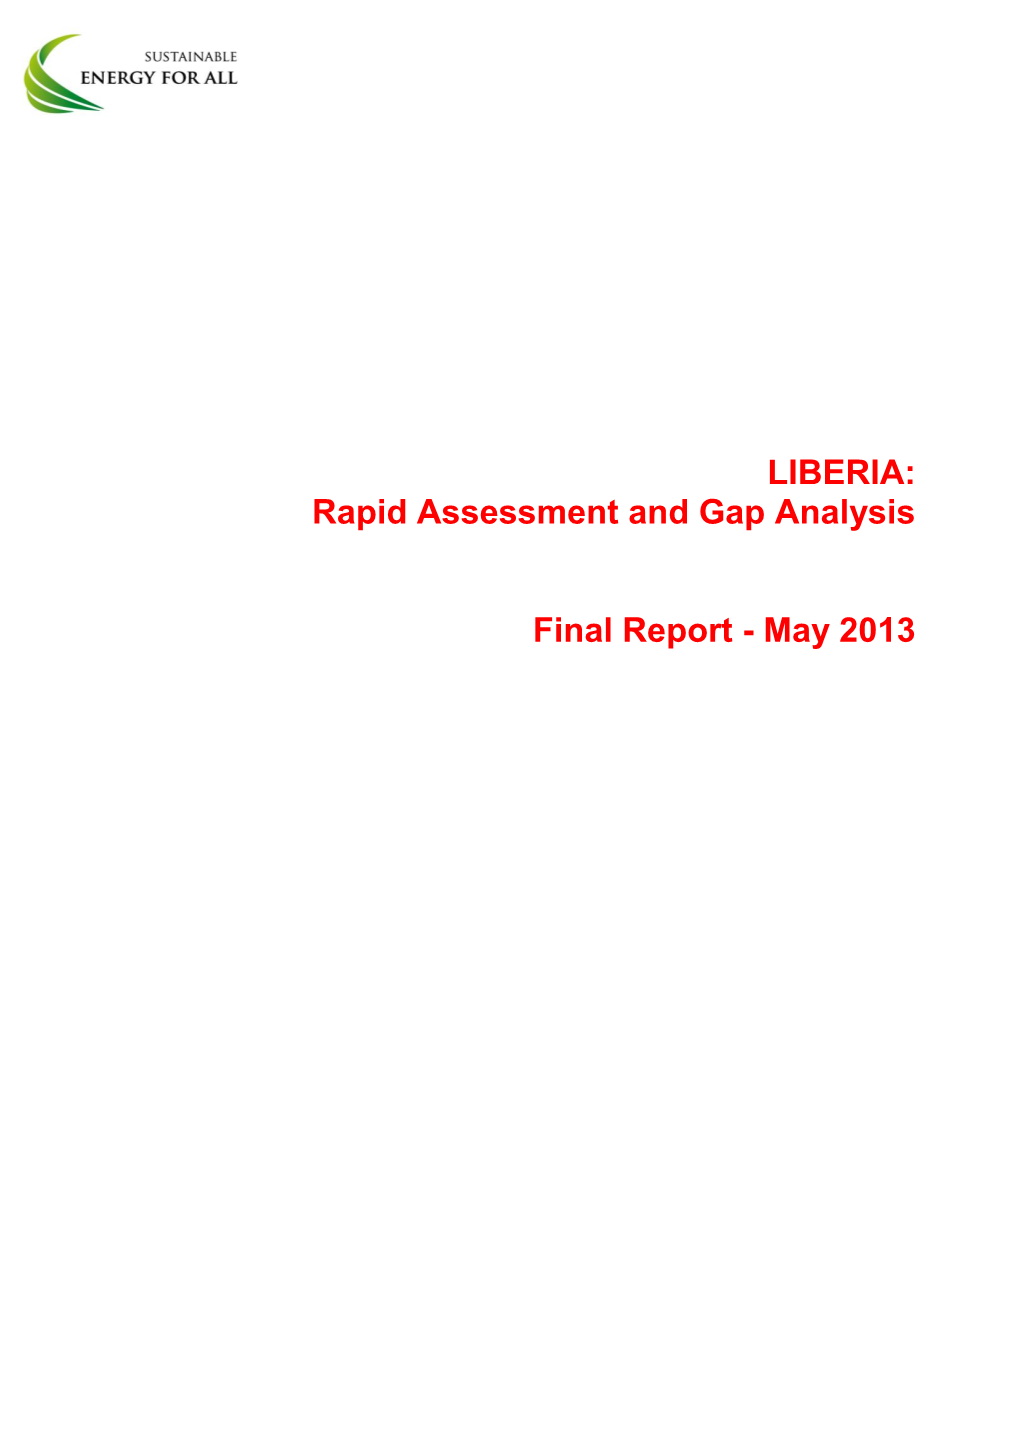 LIBERIA: Rapid Assessment and Gap Analysis Final Report